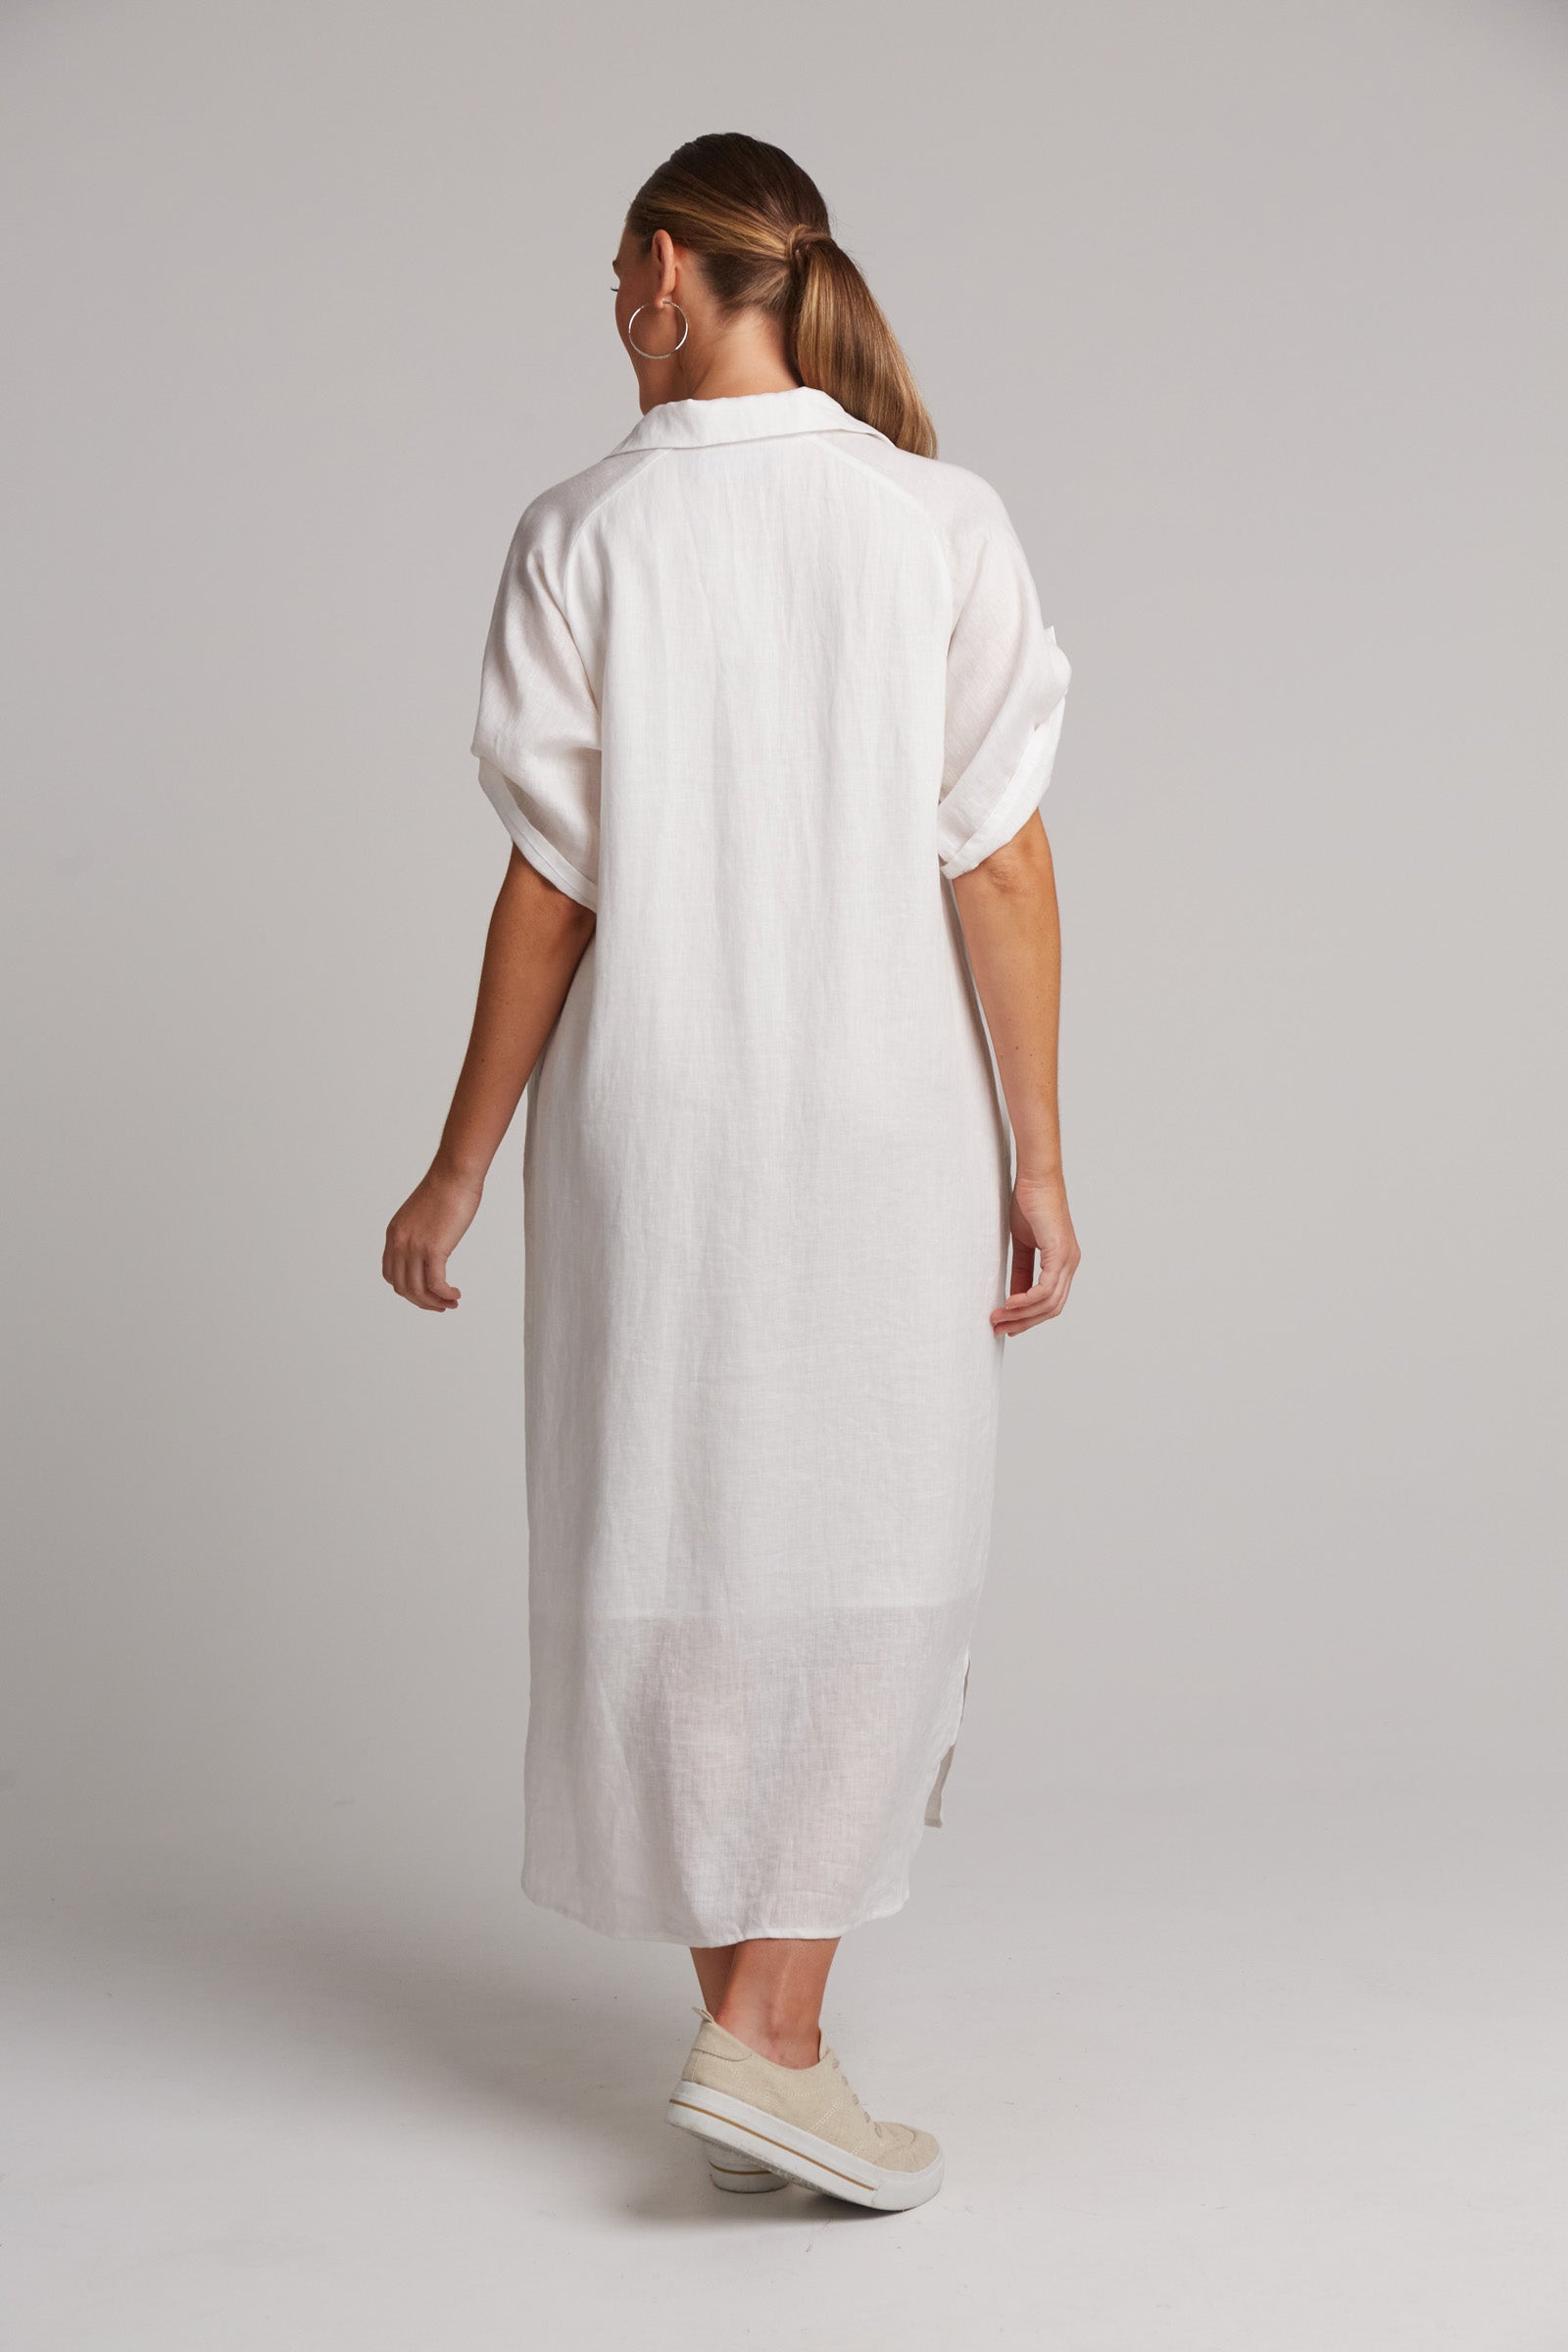 Studio Shirt Dress - Salt - eb&ive Clothing - Shirt Dress Mid Linen